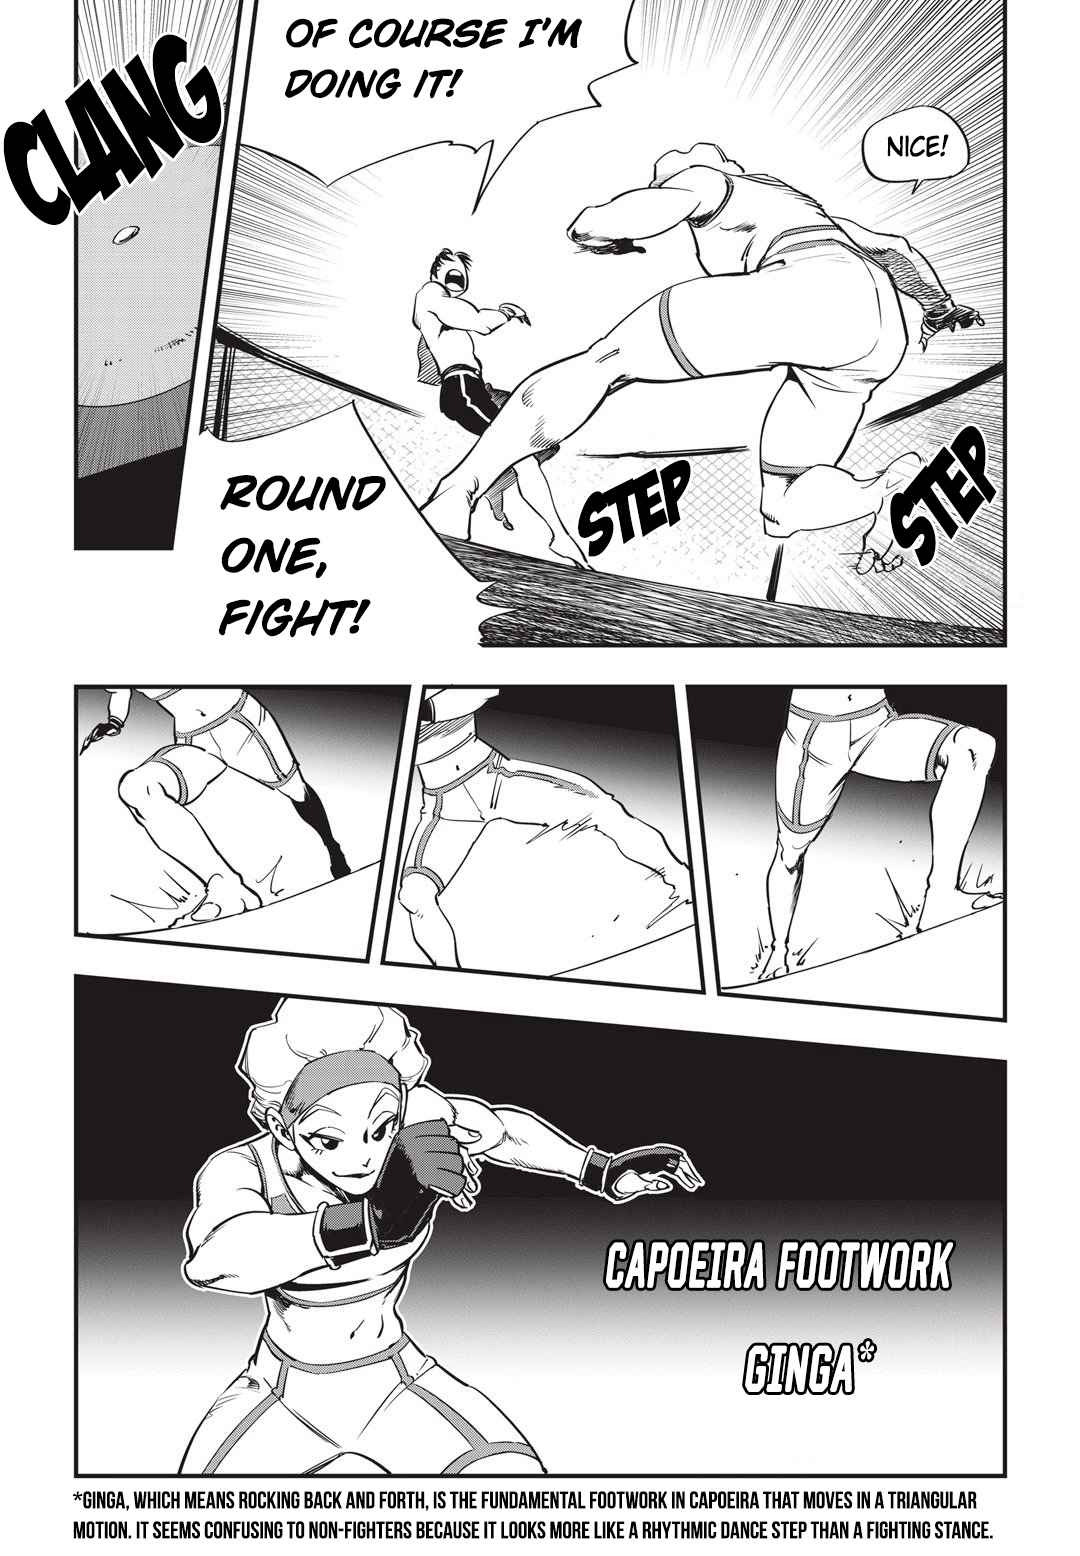 Fight Class 3 Vol. 4 Ch. 23 Round 23